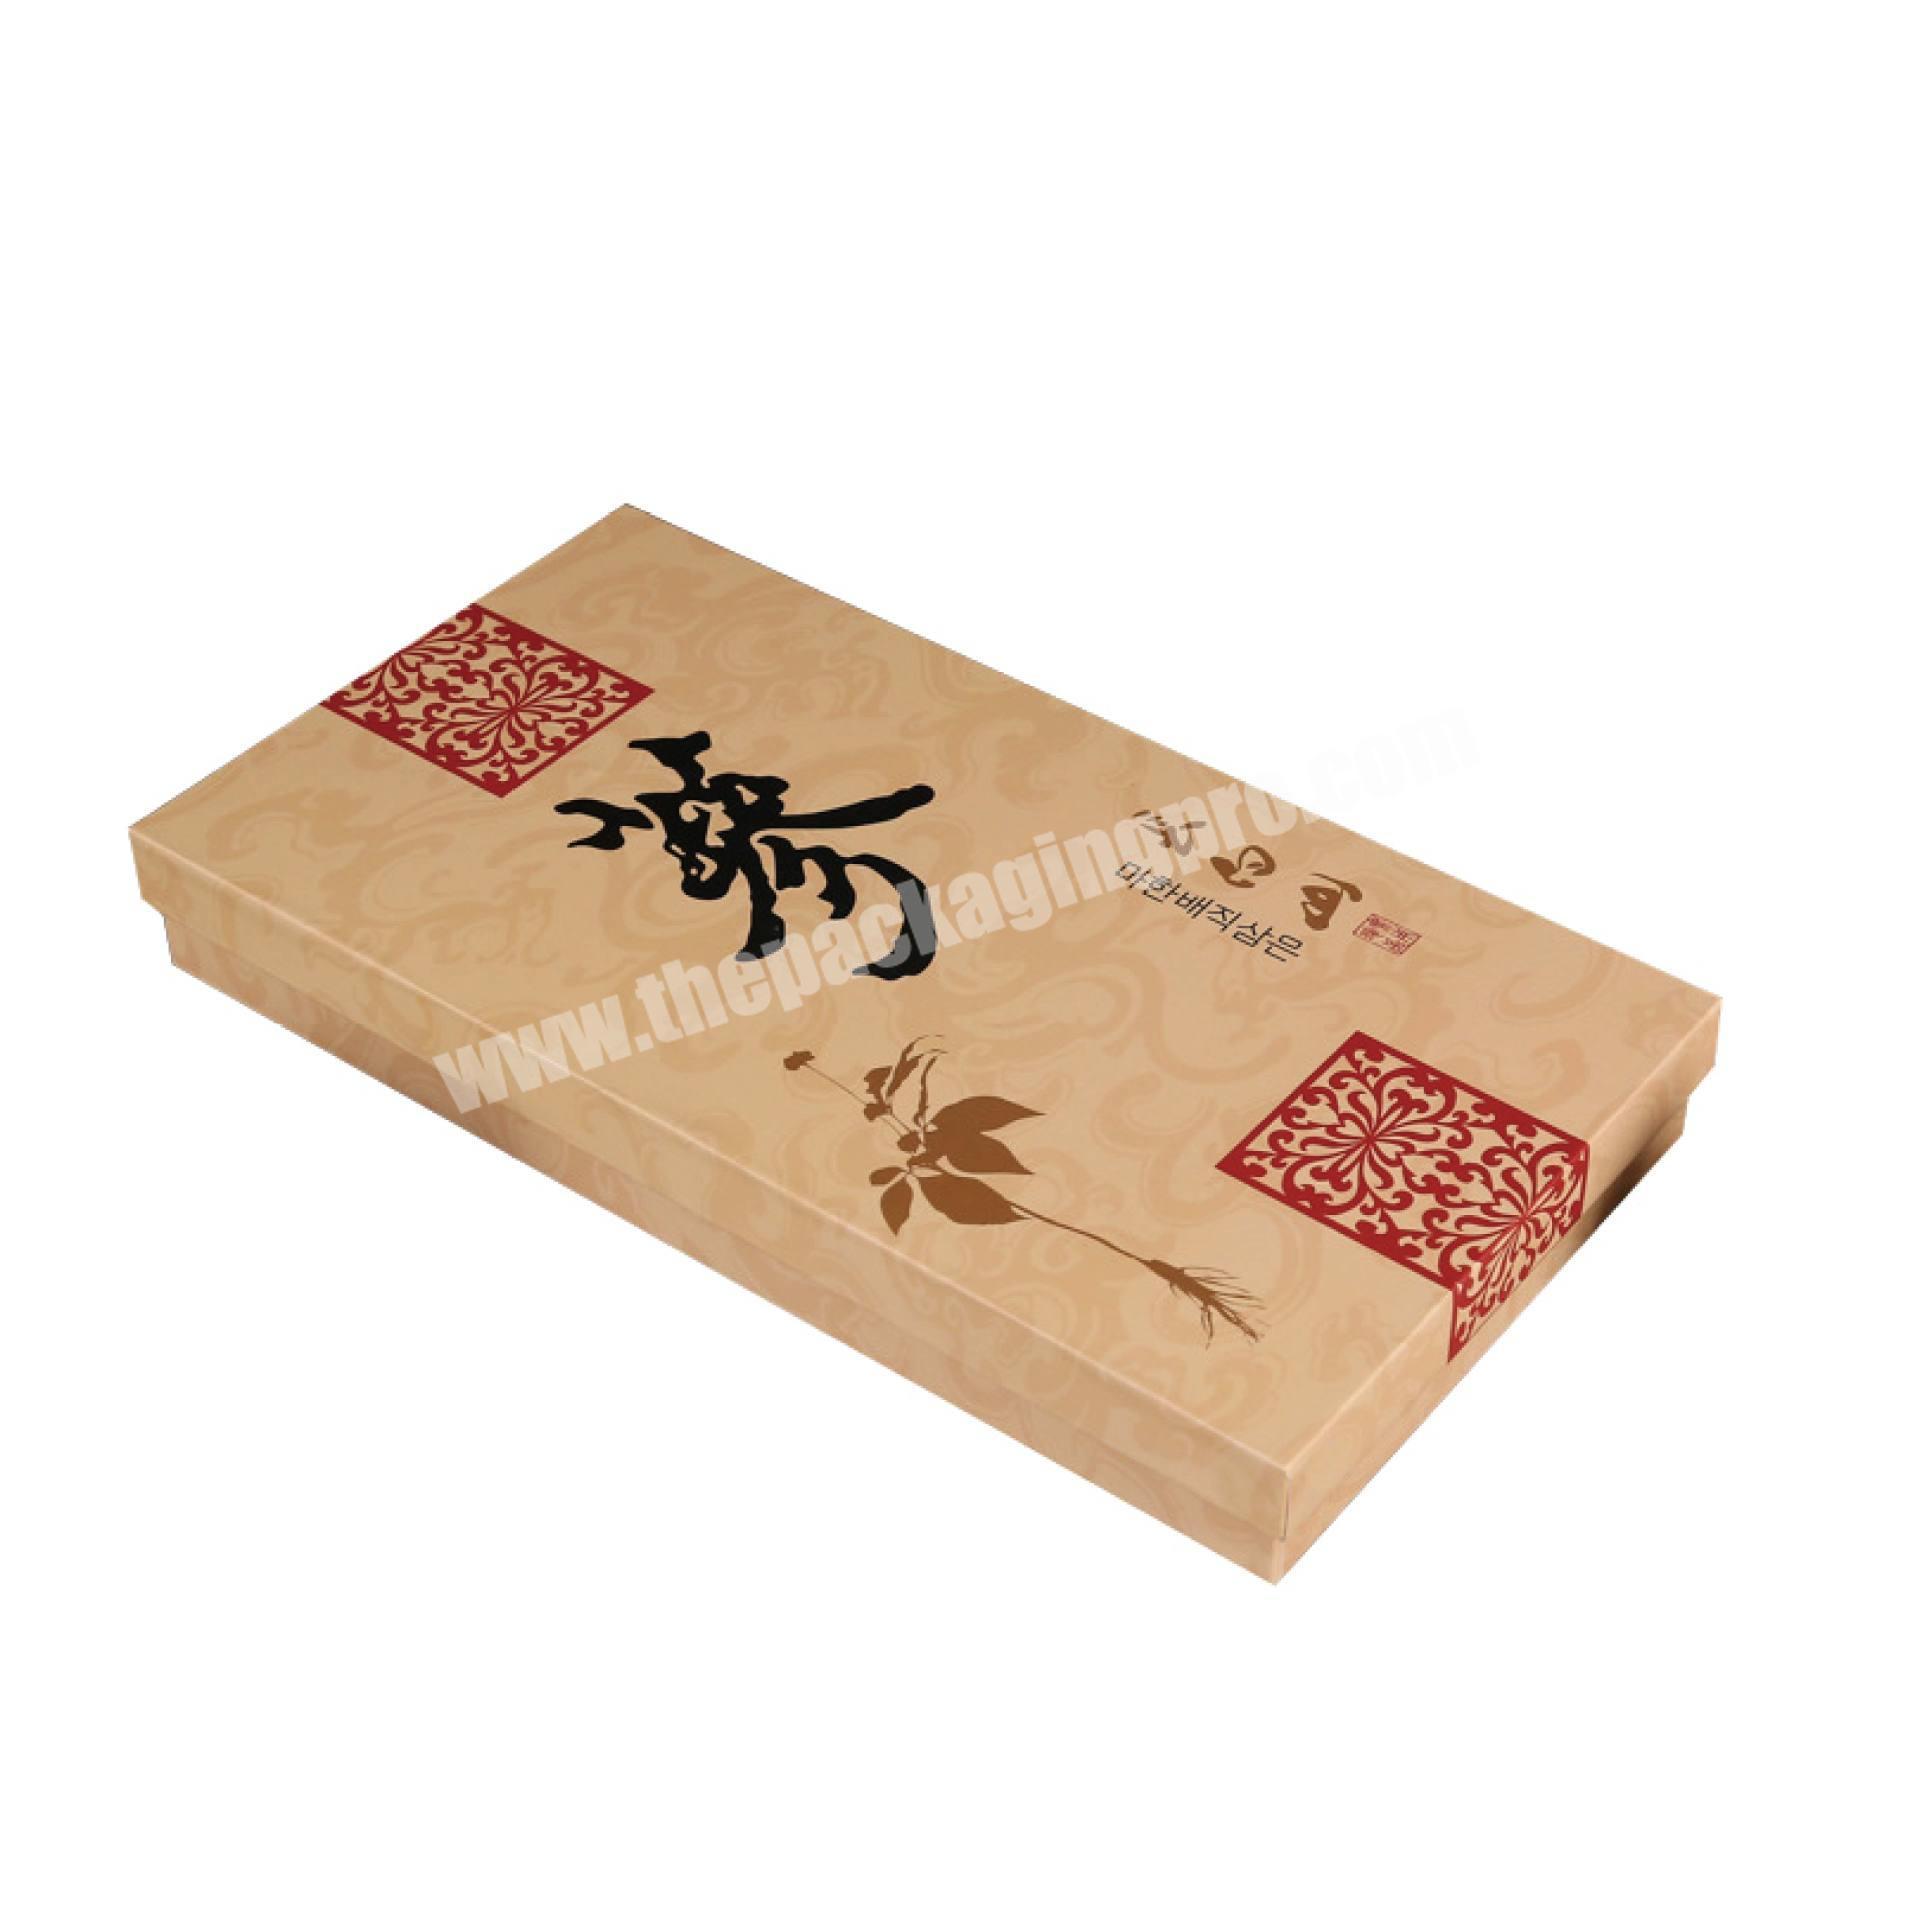 Cardboard tea packaging box designed for tea leaves